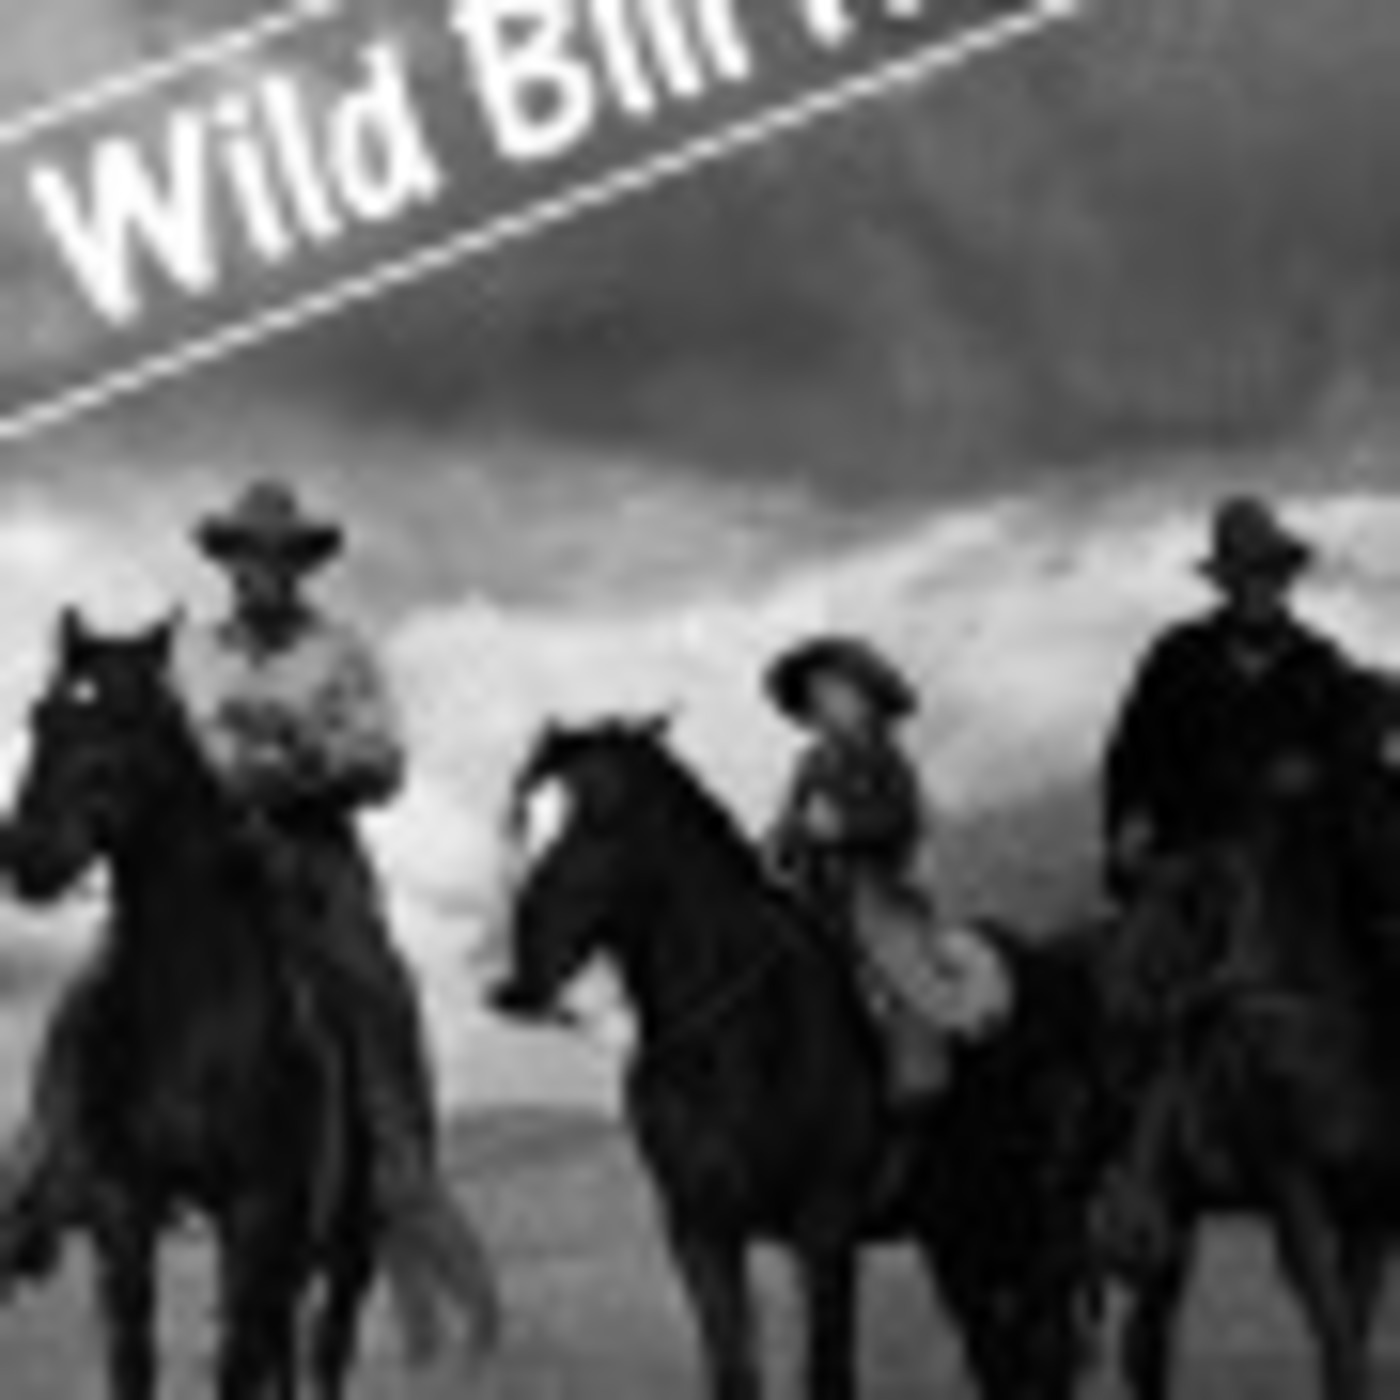 Wild Bill Hickock - 53-03-27 Carnival of danger